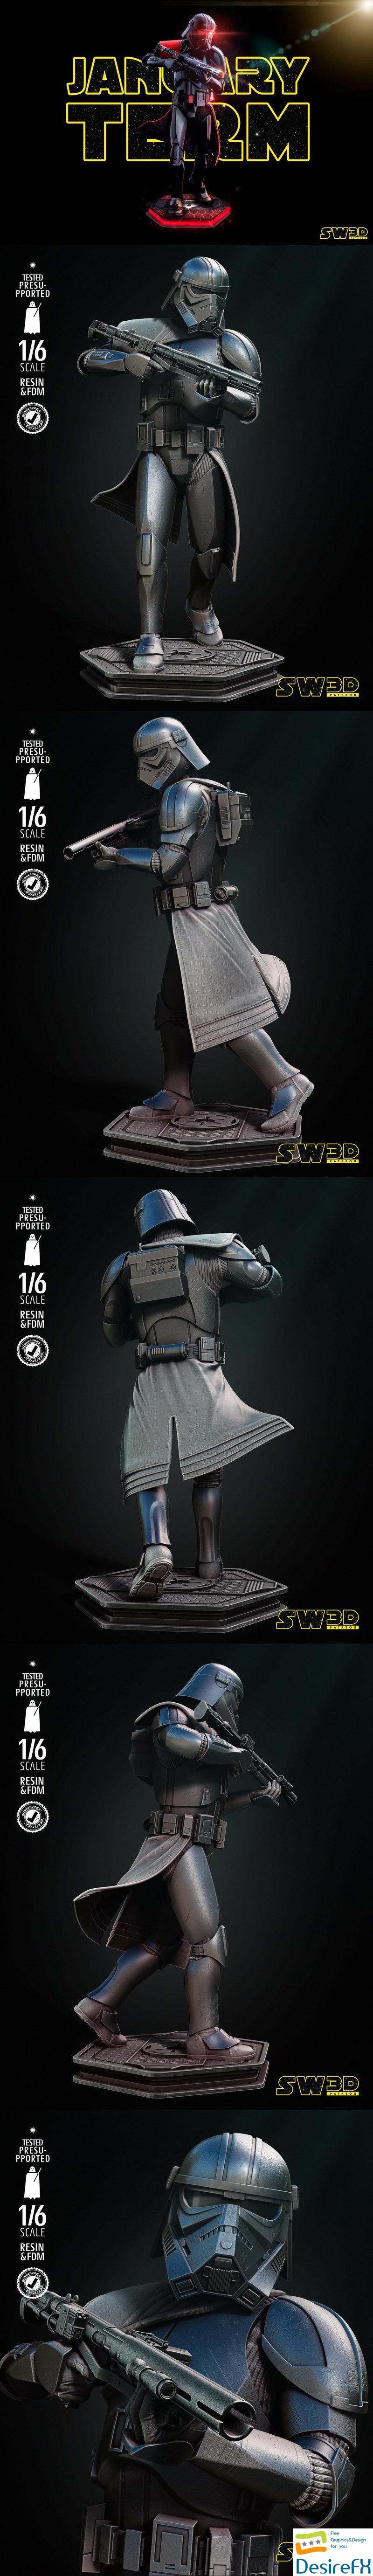 Star Wars - Purge Trooper Sculpture - 3D Print